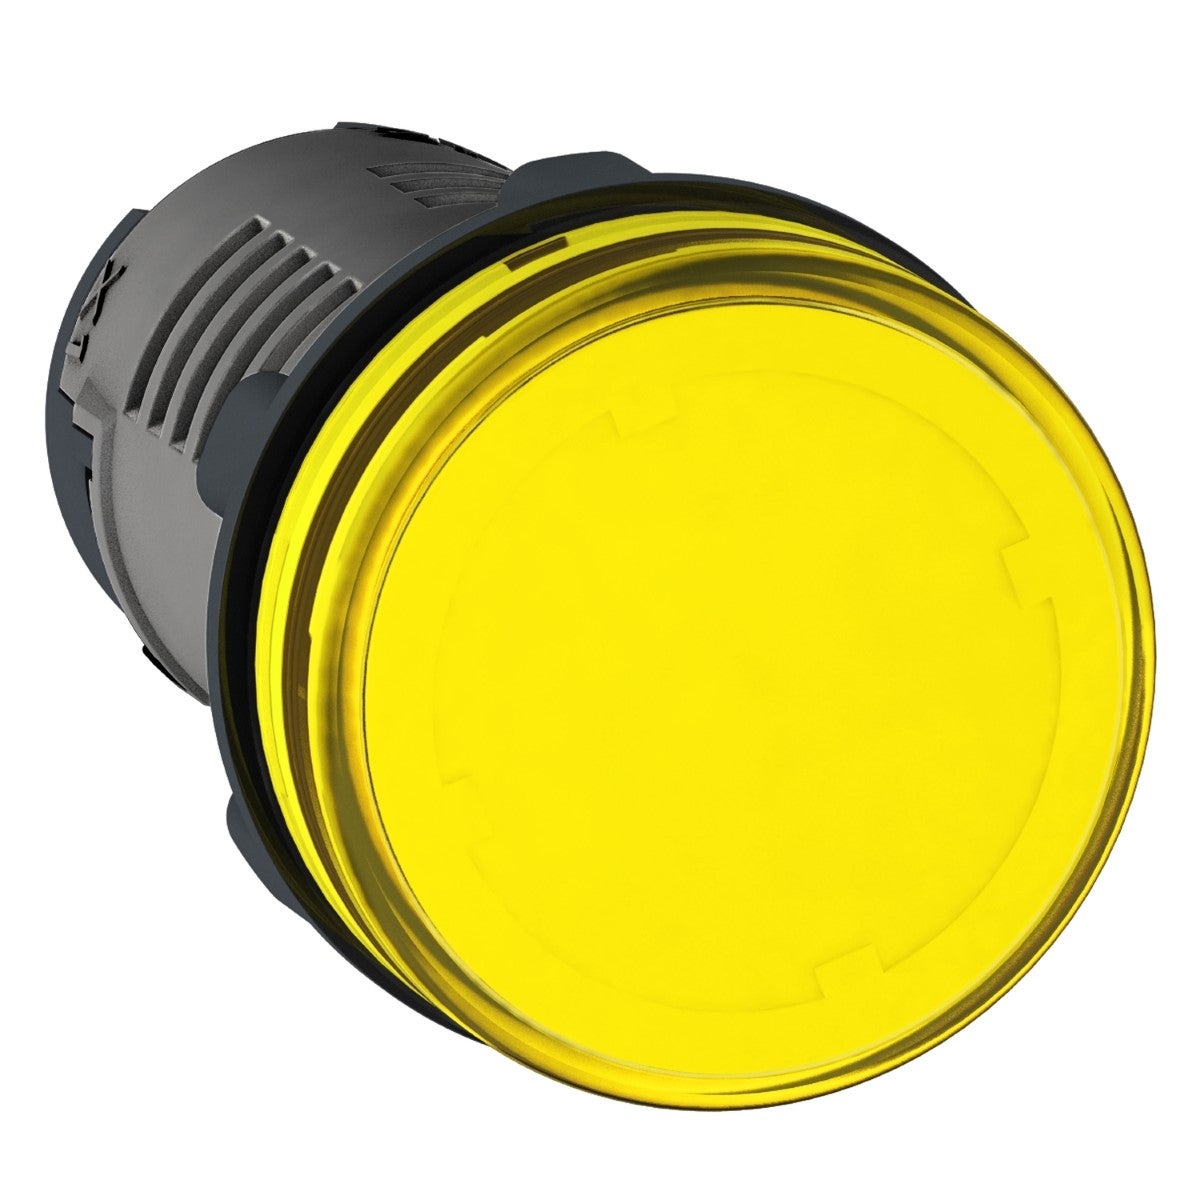 Easy Harmony XA2E, Monolithic pilot light, plastic, yellow, �22, integral LED, screw clamp terminals, 220 V DC